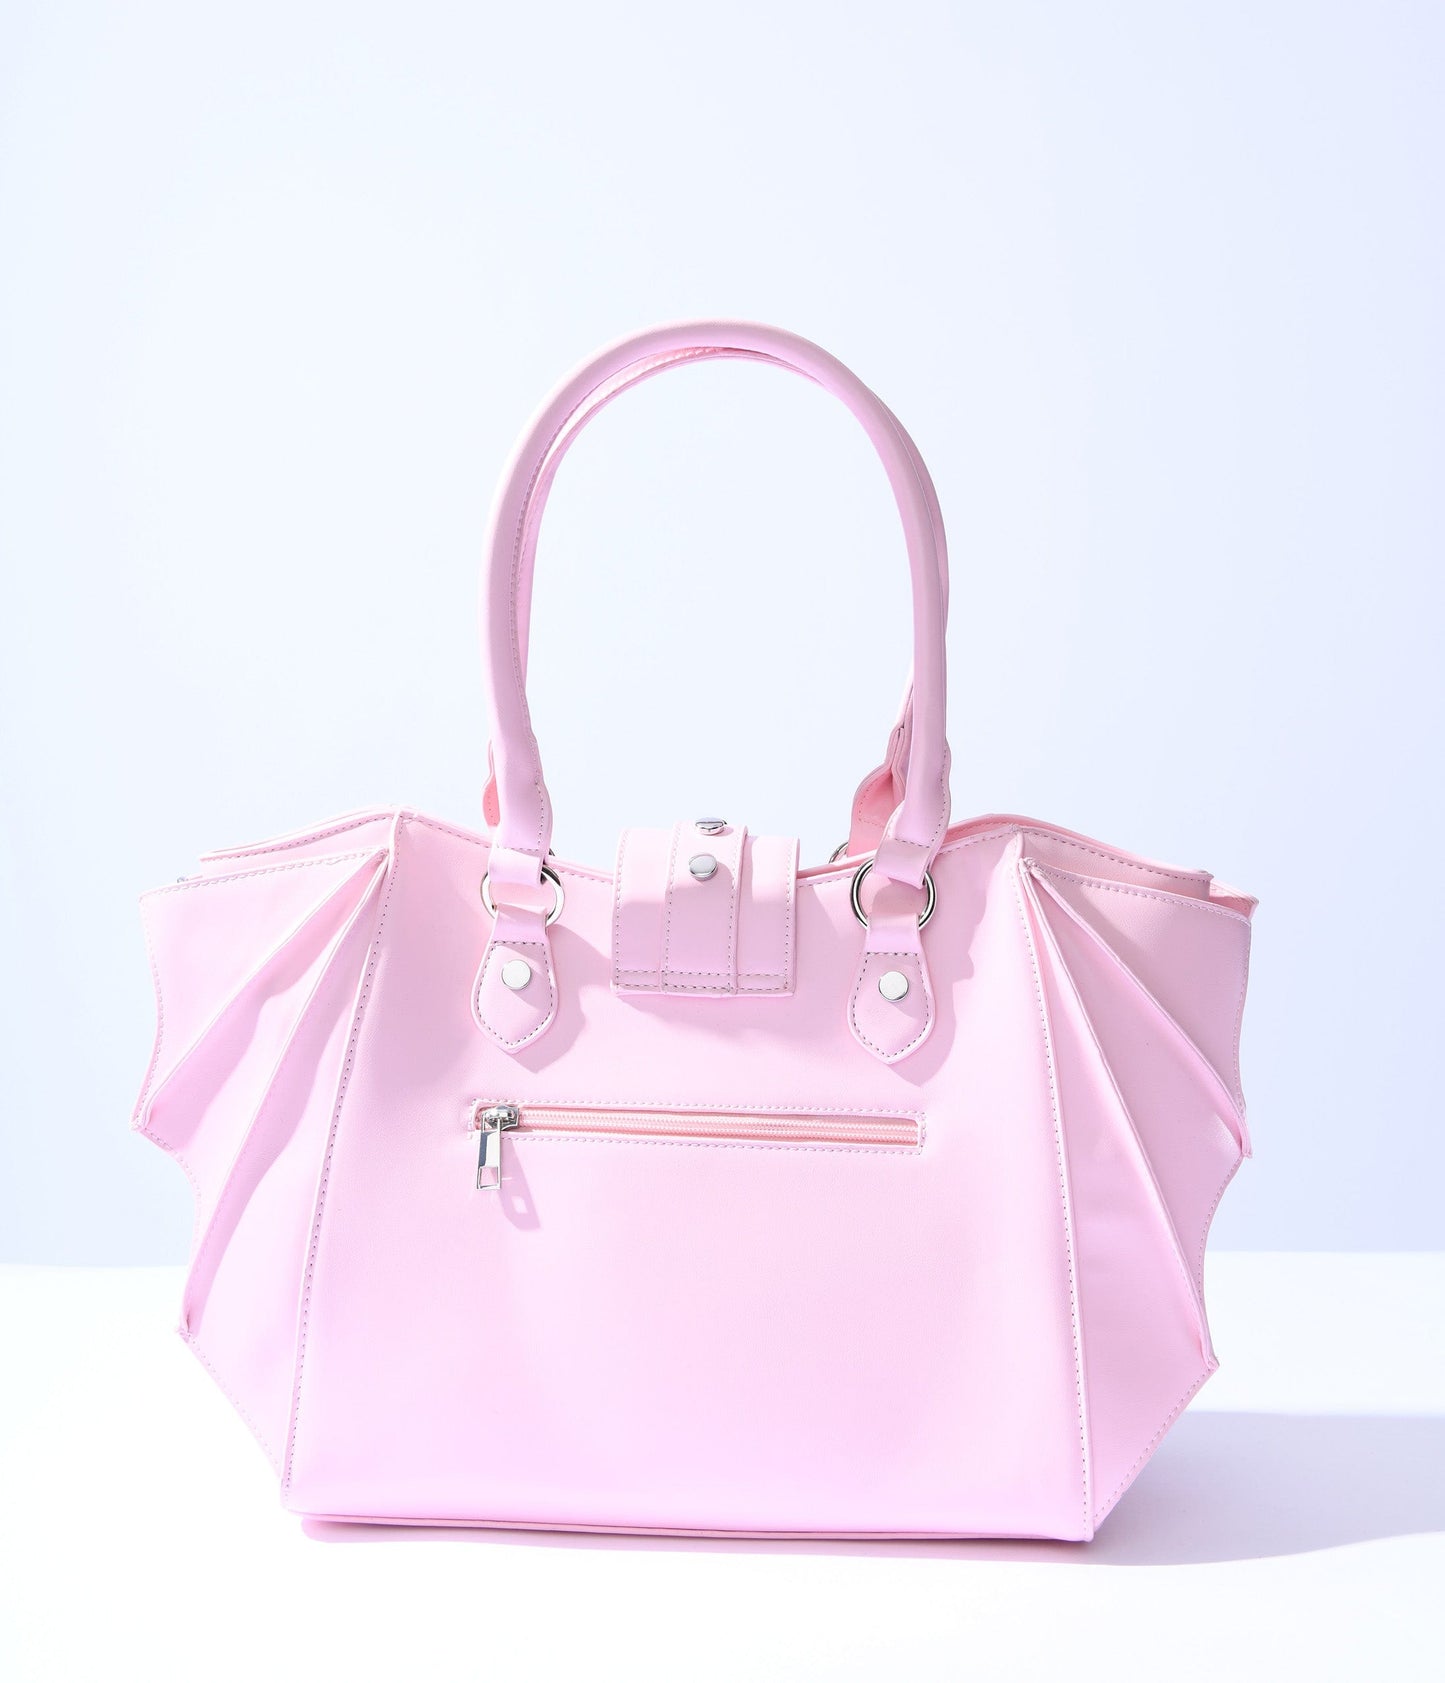 Pink Leatherette Bat Wing Handbag